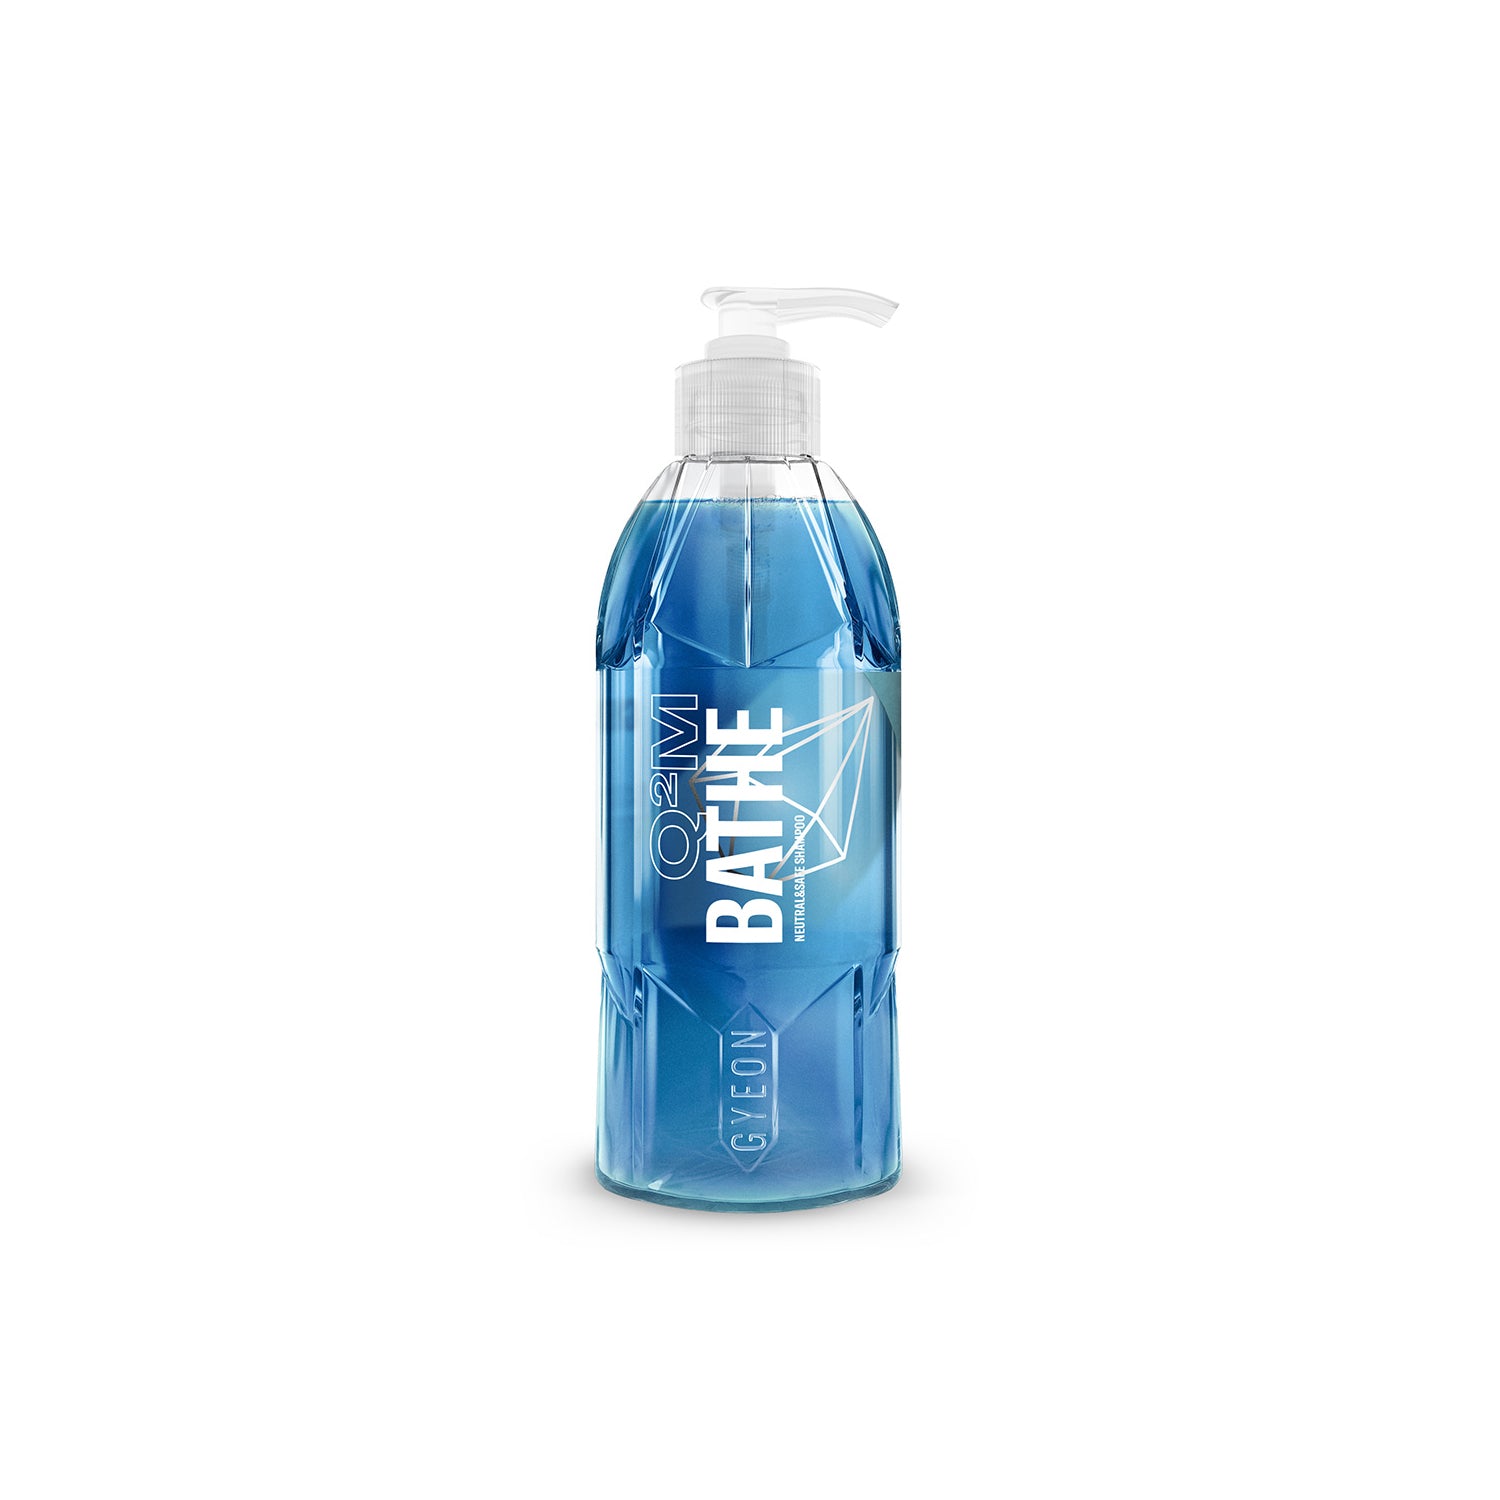 Gyeon Q2M Bathe Shampoo Car Wash 400ml Bottle - Available At R44 Detailing